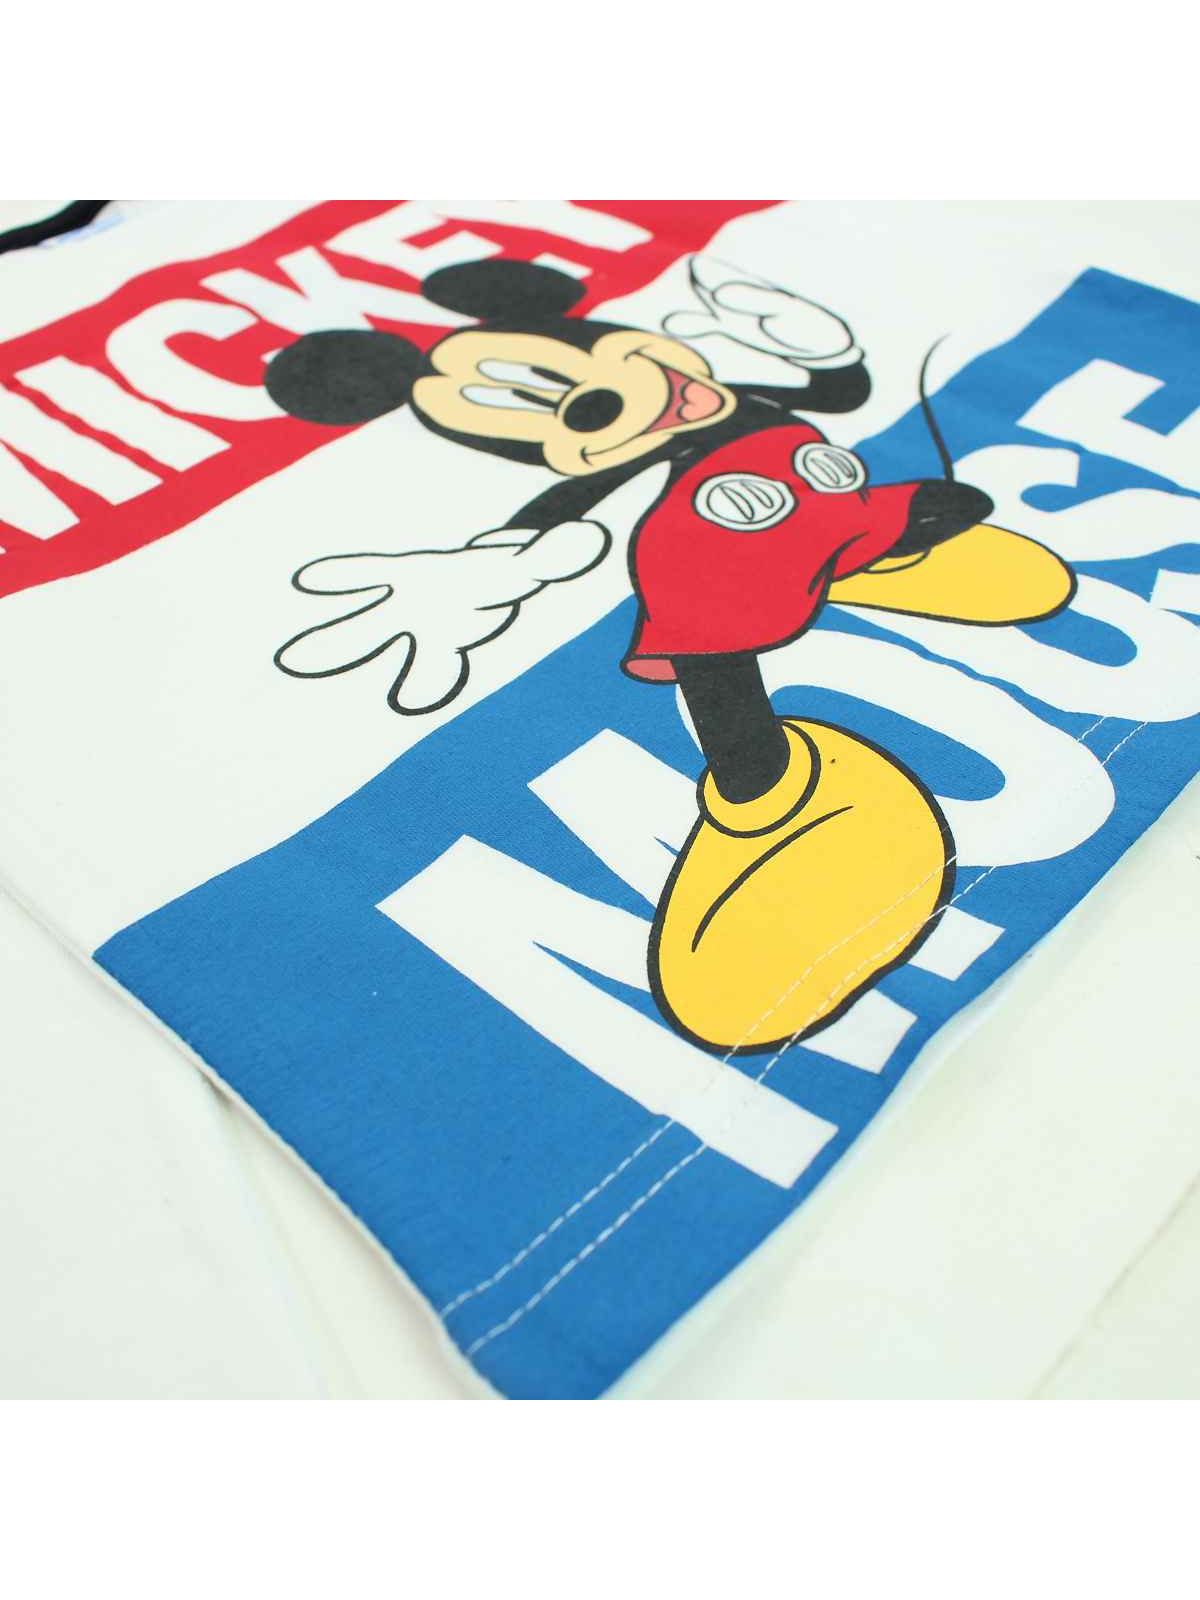 Mickey Long sleeve T-shirt